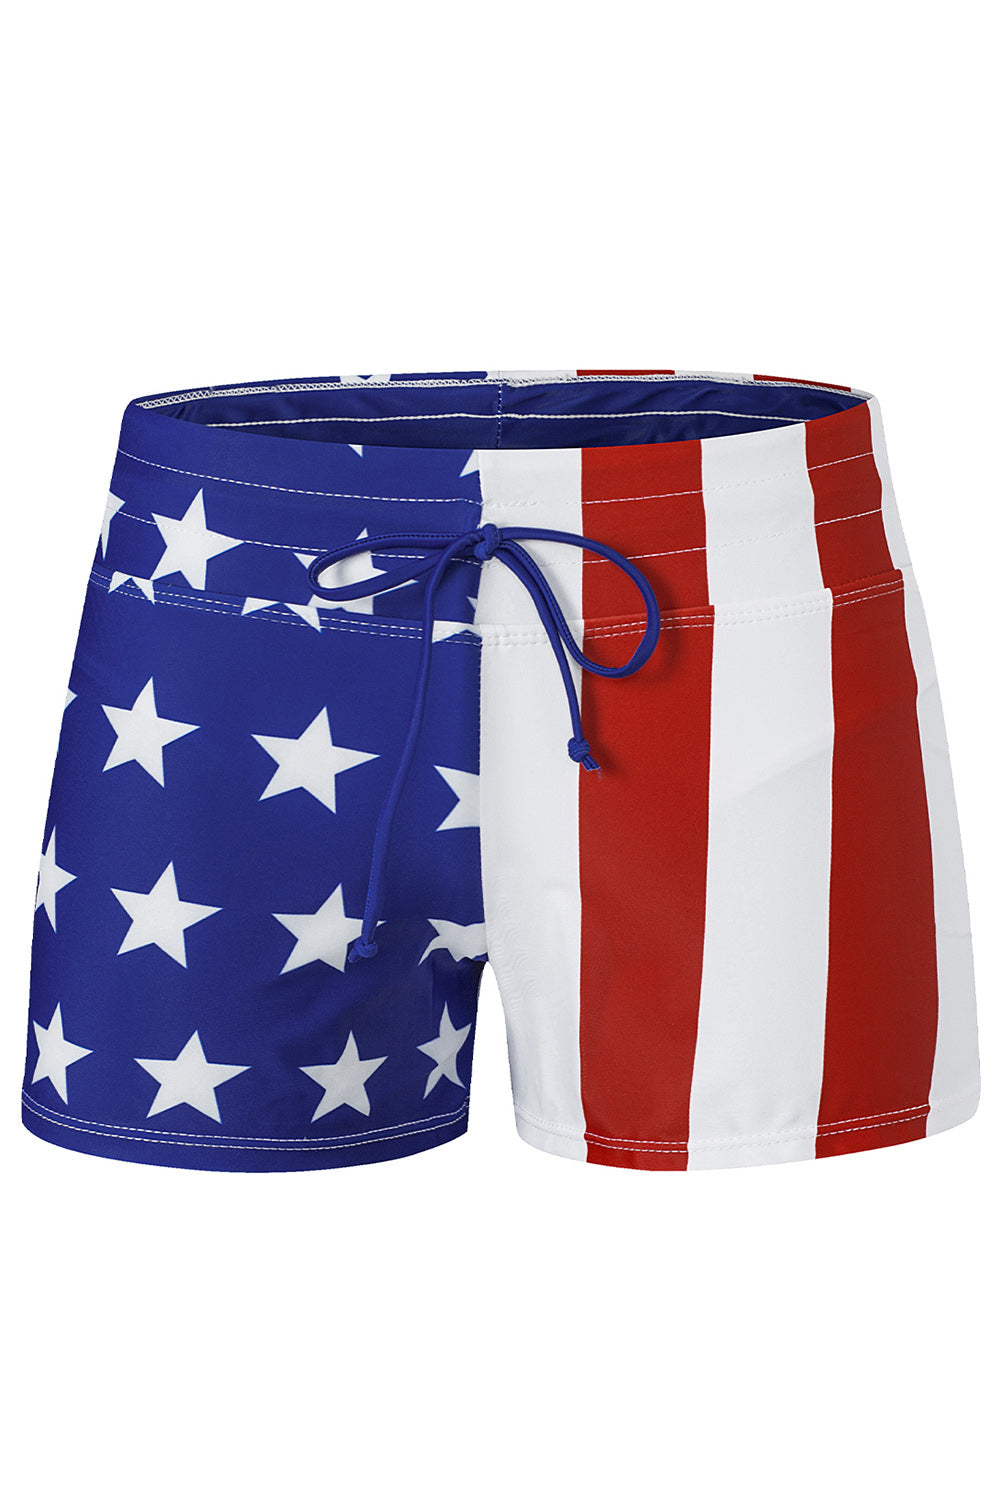 American Flag Women Board Shorts